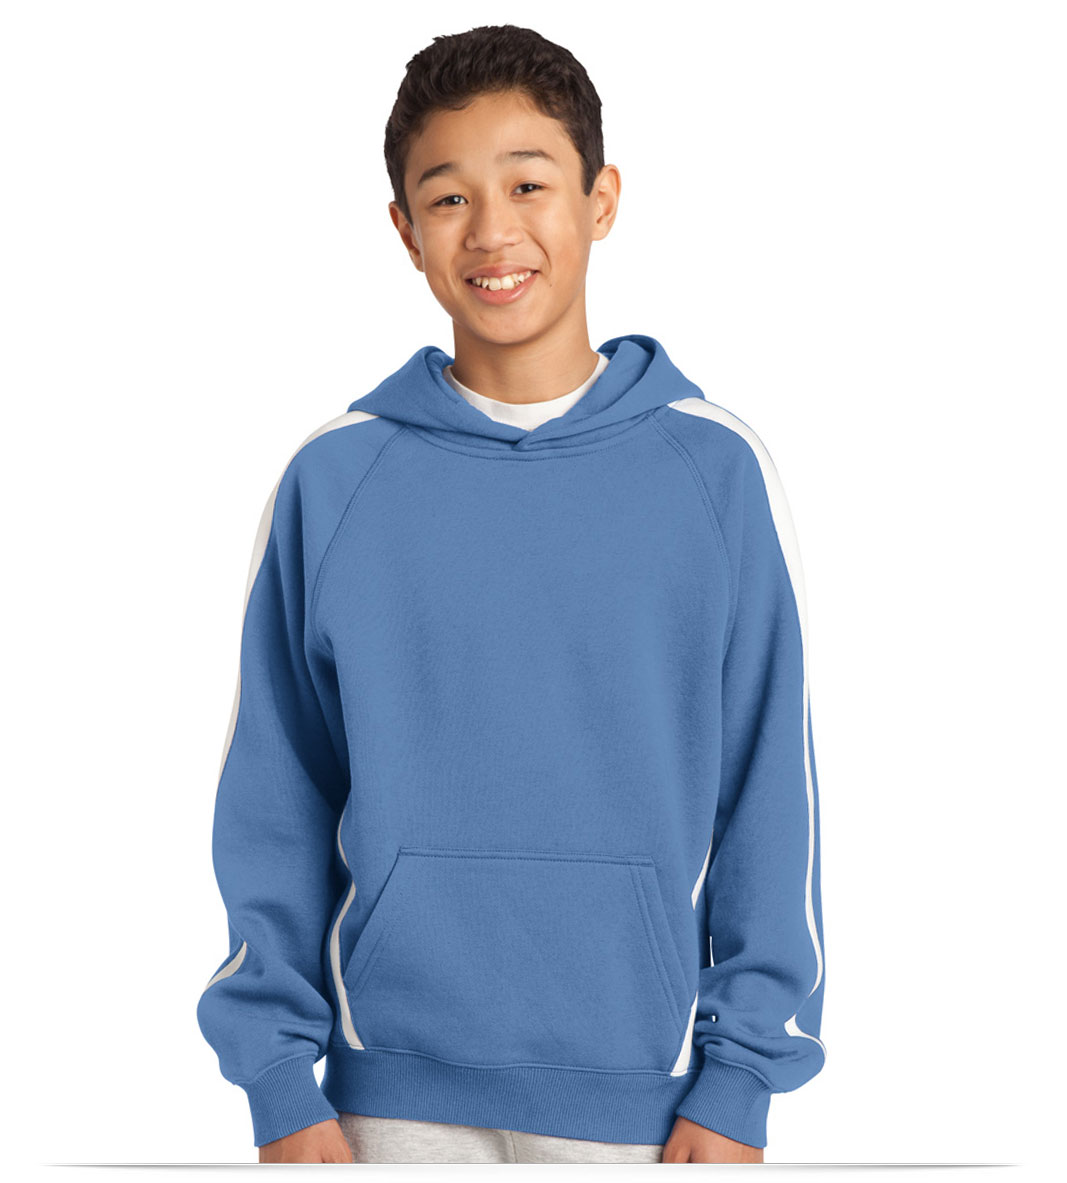 YUANXUAN Pewdiepie Custom Wavy Logo Hoodie Sweater for Youth Boys Girls